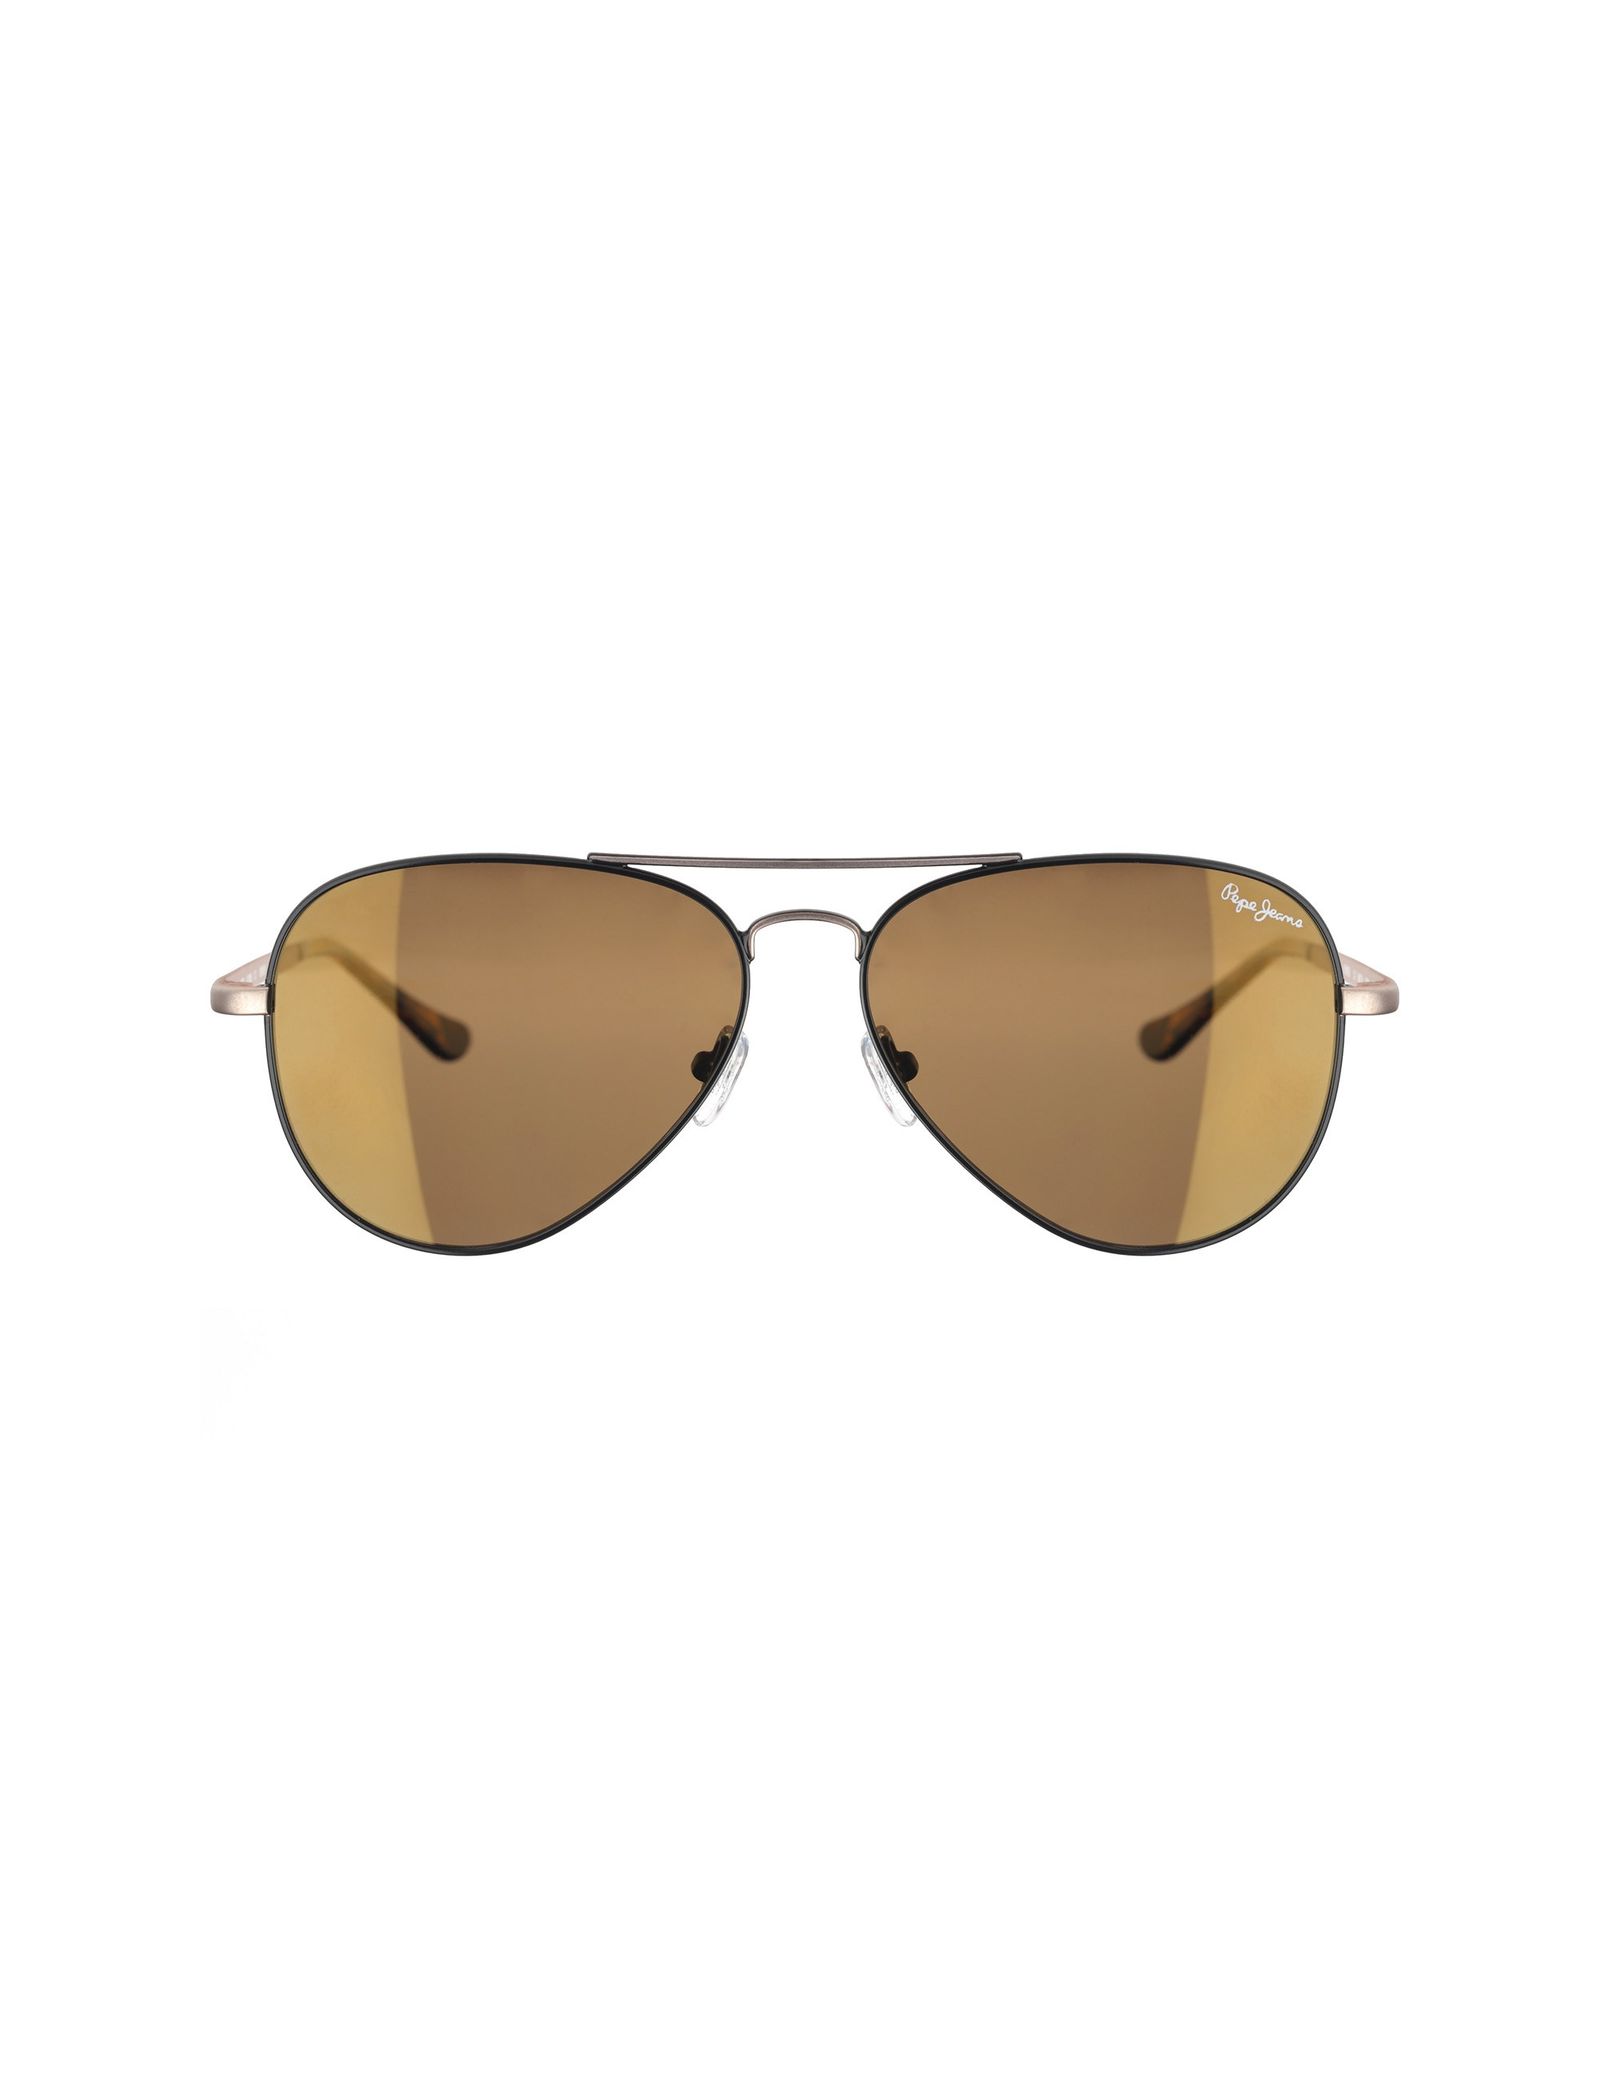 عینک آفتابی خلبانی زنانه - پپه جینز - مشکي و طلايي - 1